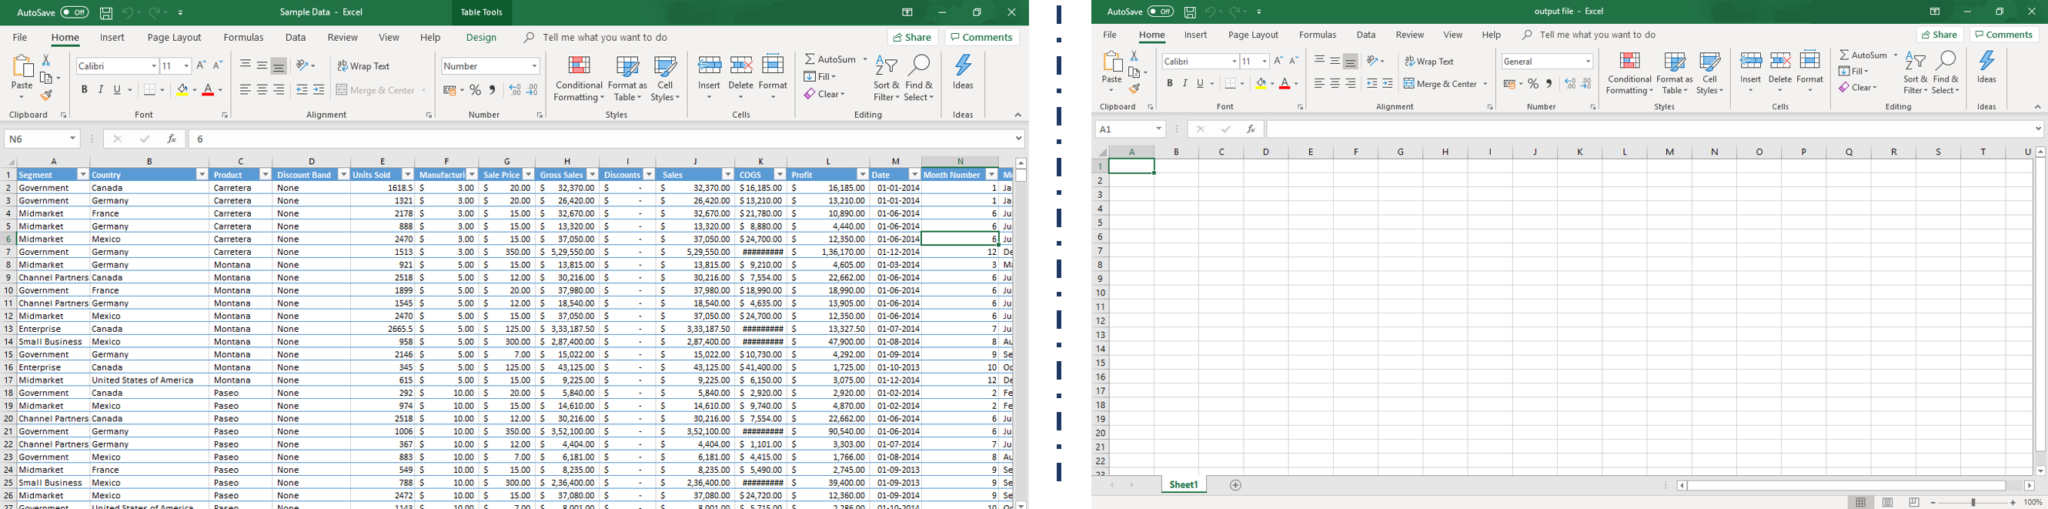 Sample Excel File - Automation Anywhere Examples - Edureka